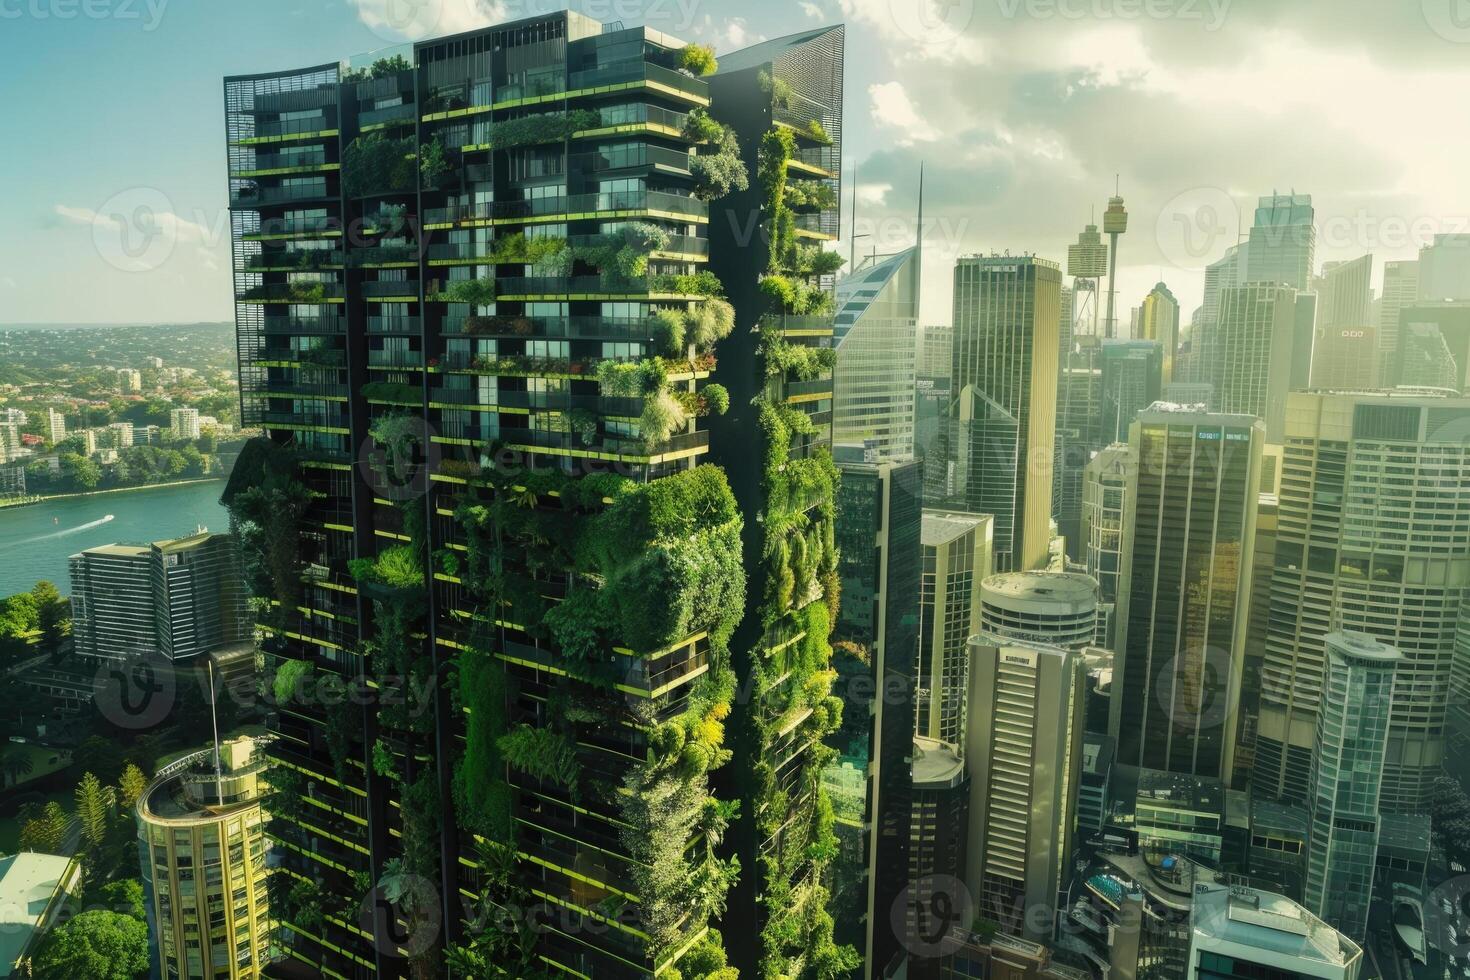 Eco friendly skyscraper with plants in urban setting  Sydney  Australia. photo